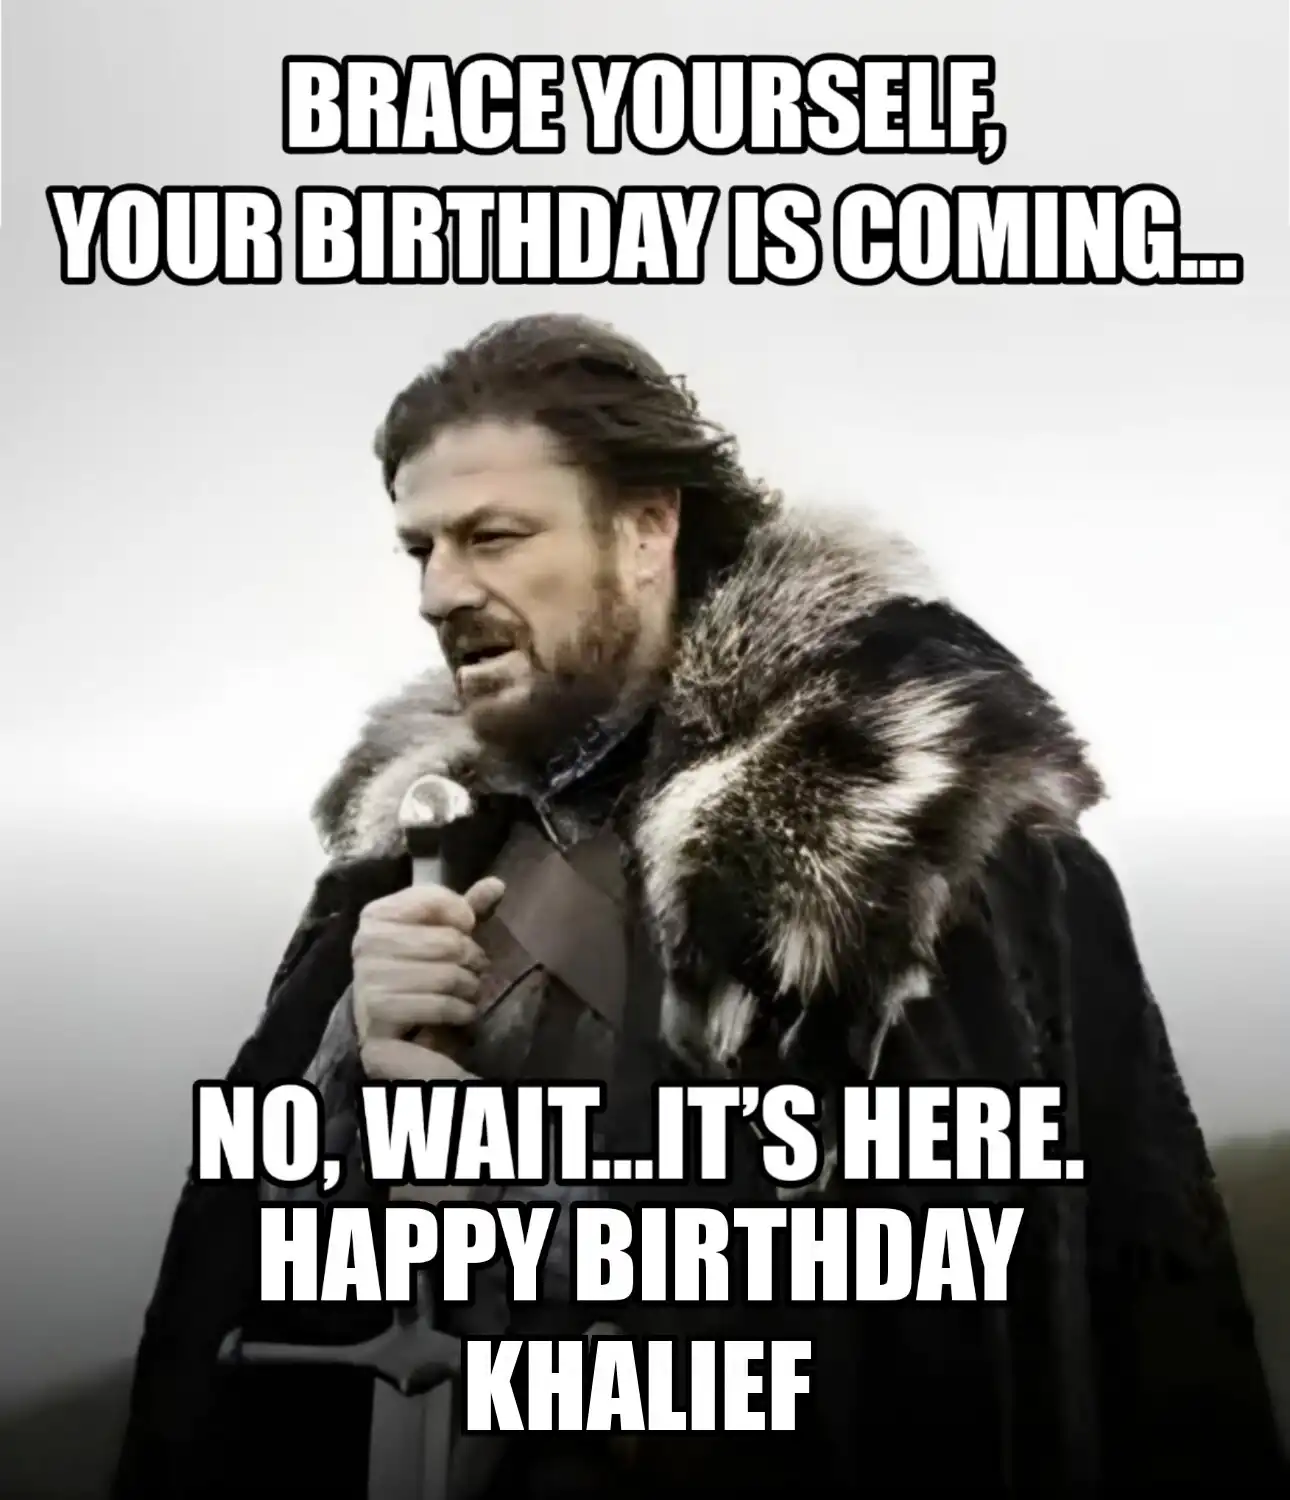 Happy Birthday Khalief Brace Yourself Your Birthday Is Coming Meme